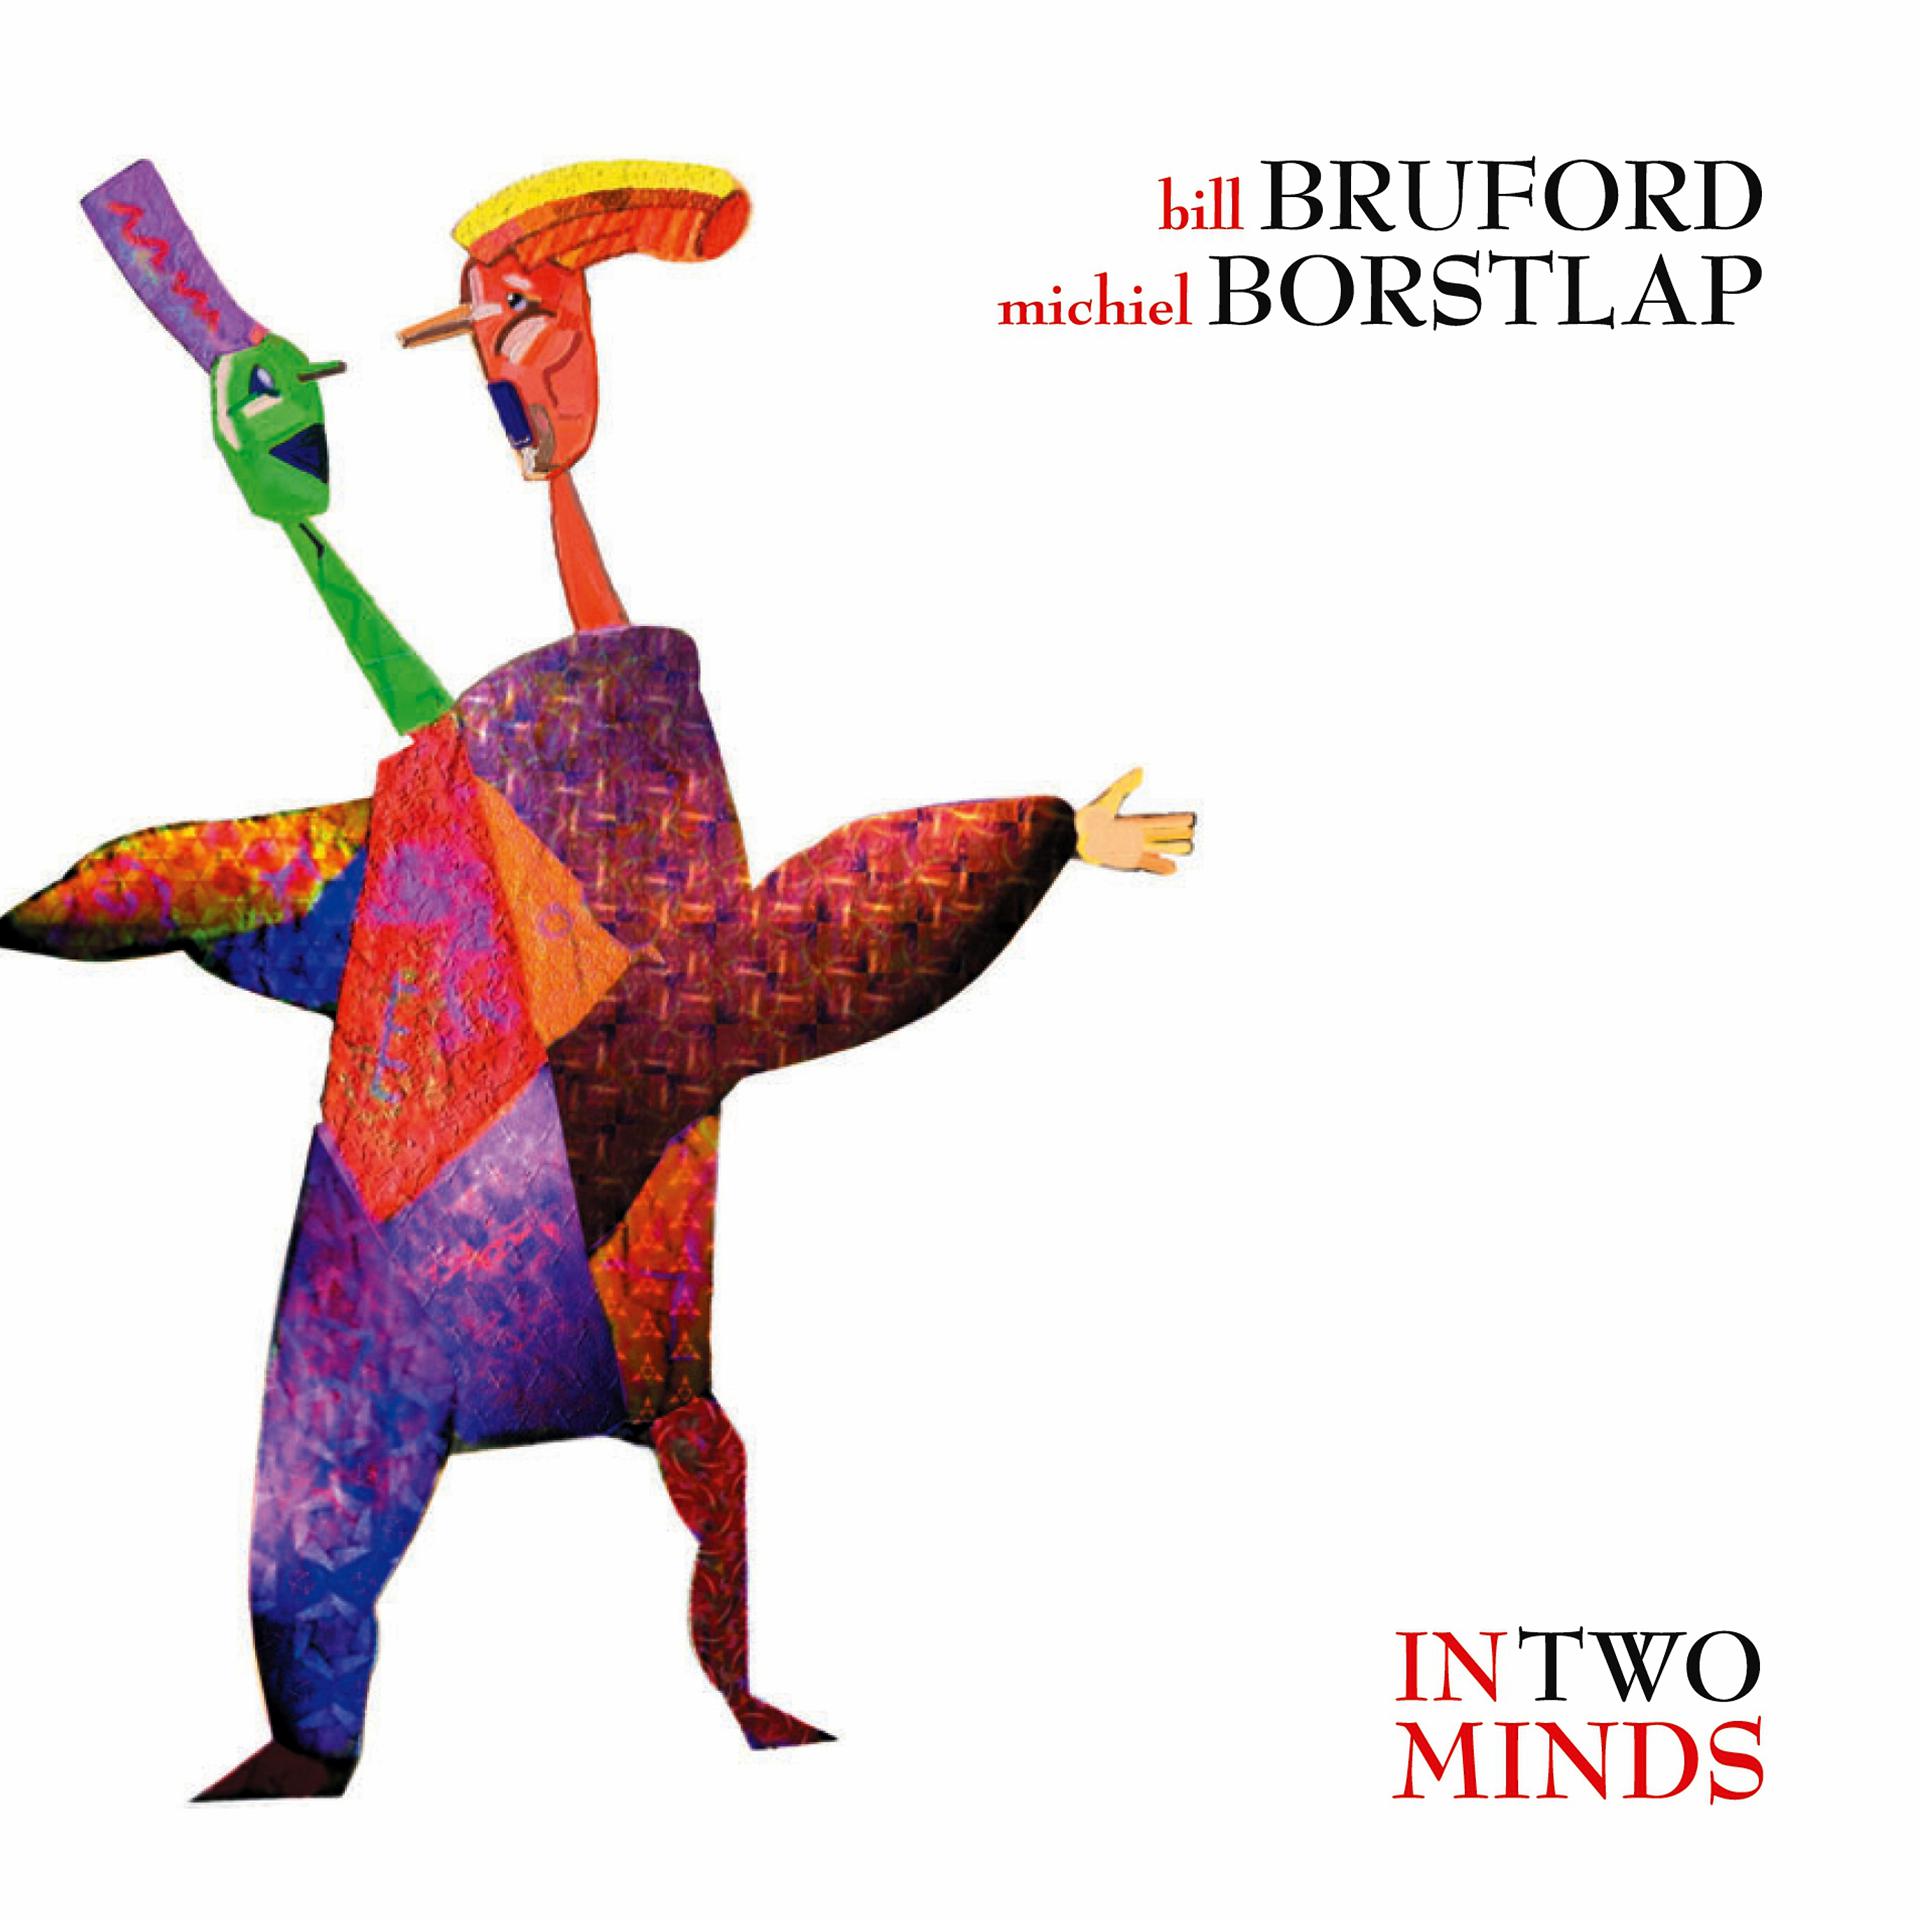 Постер к треку Michiel Borstlap, Bill Bruford - The Odd One Out